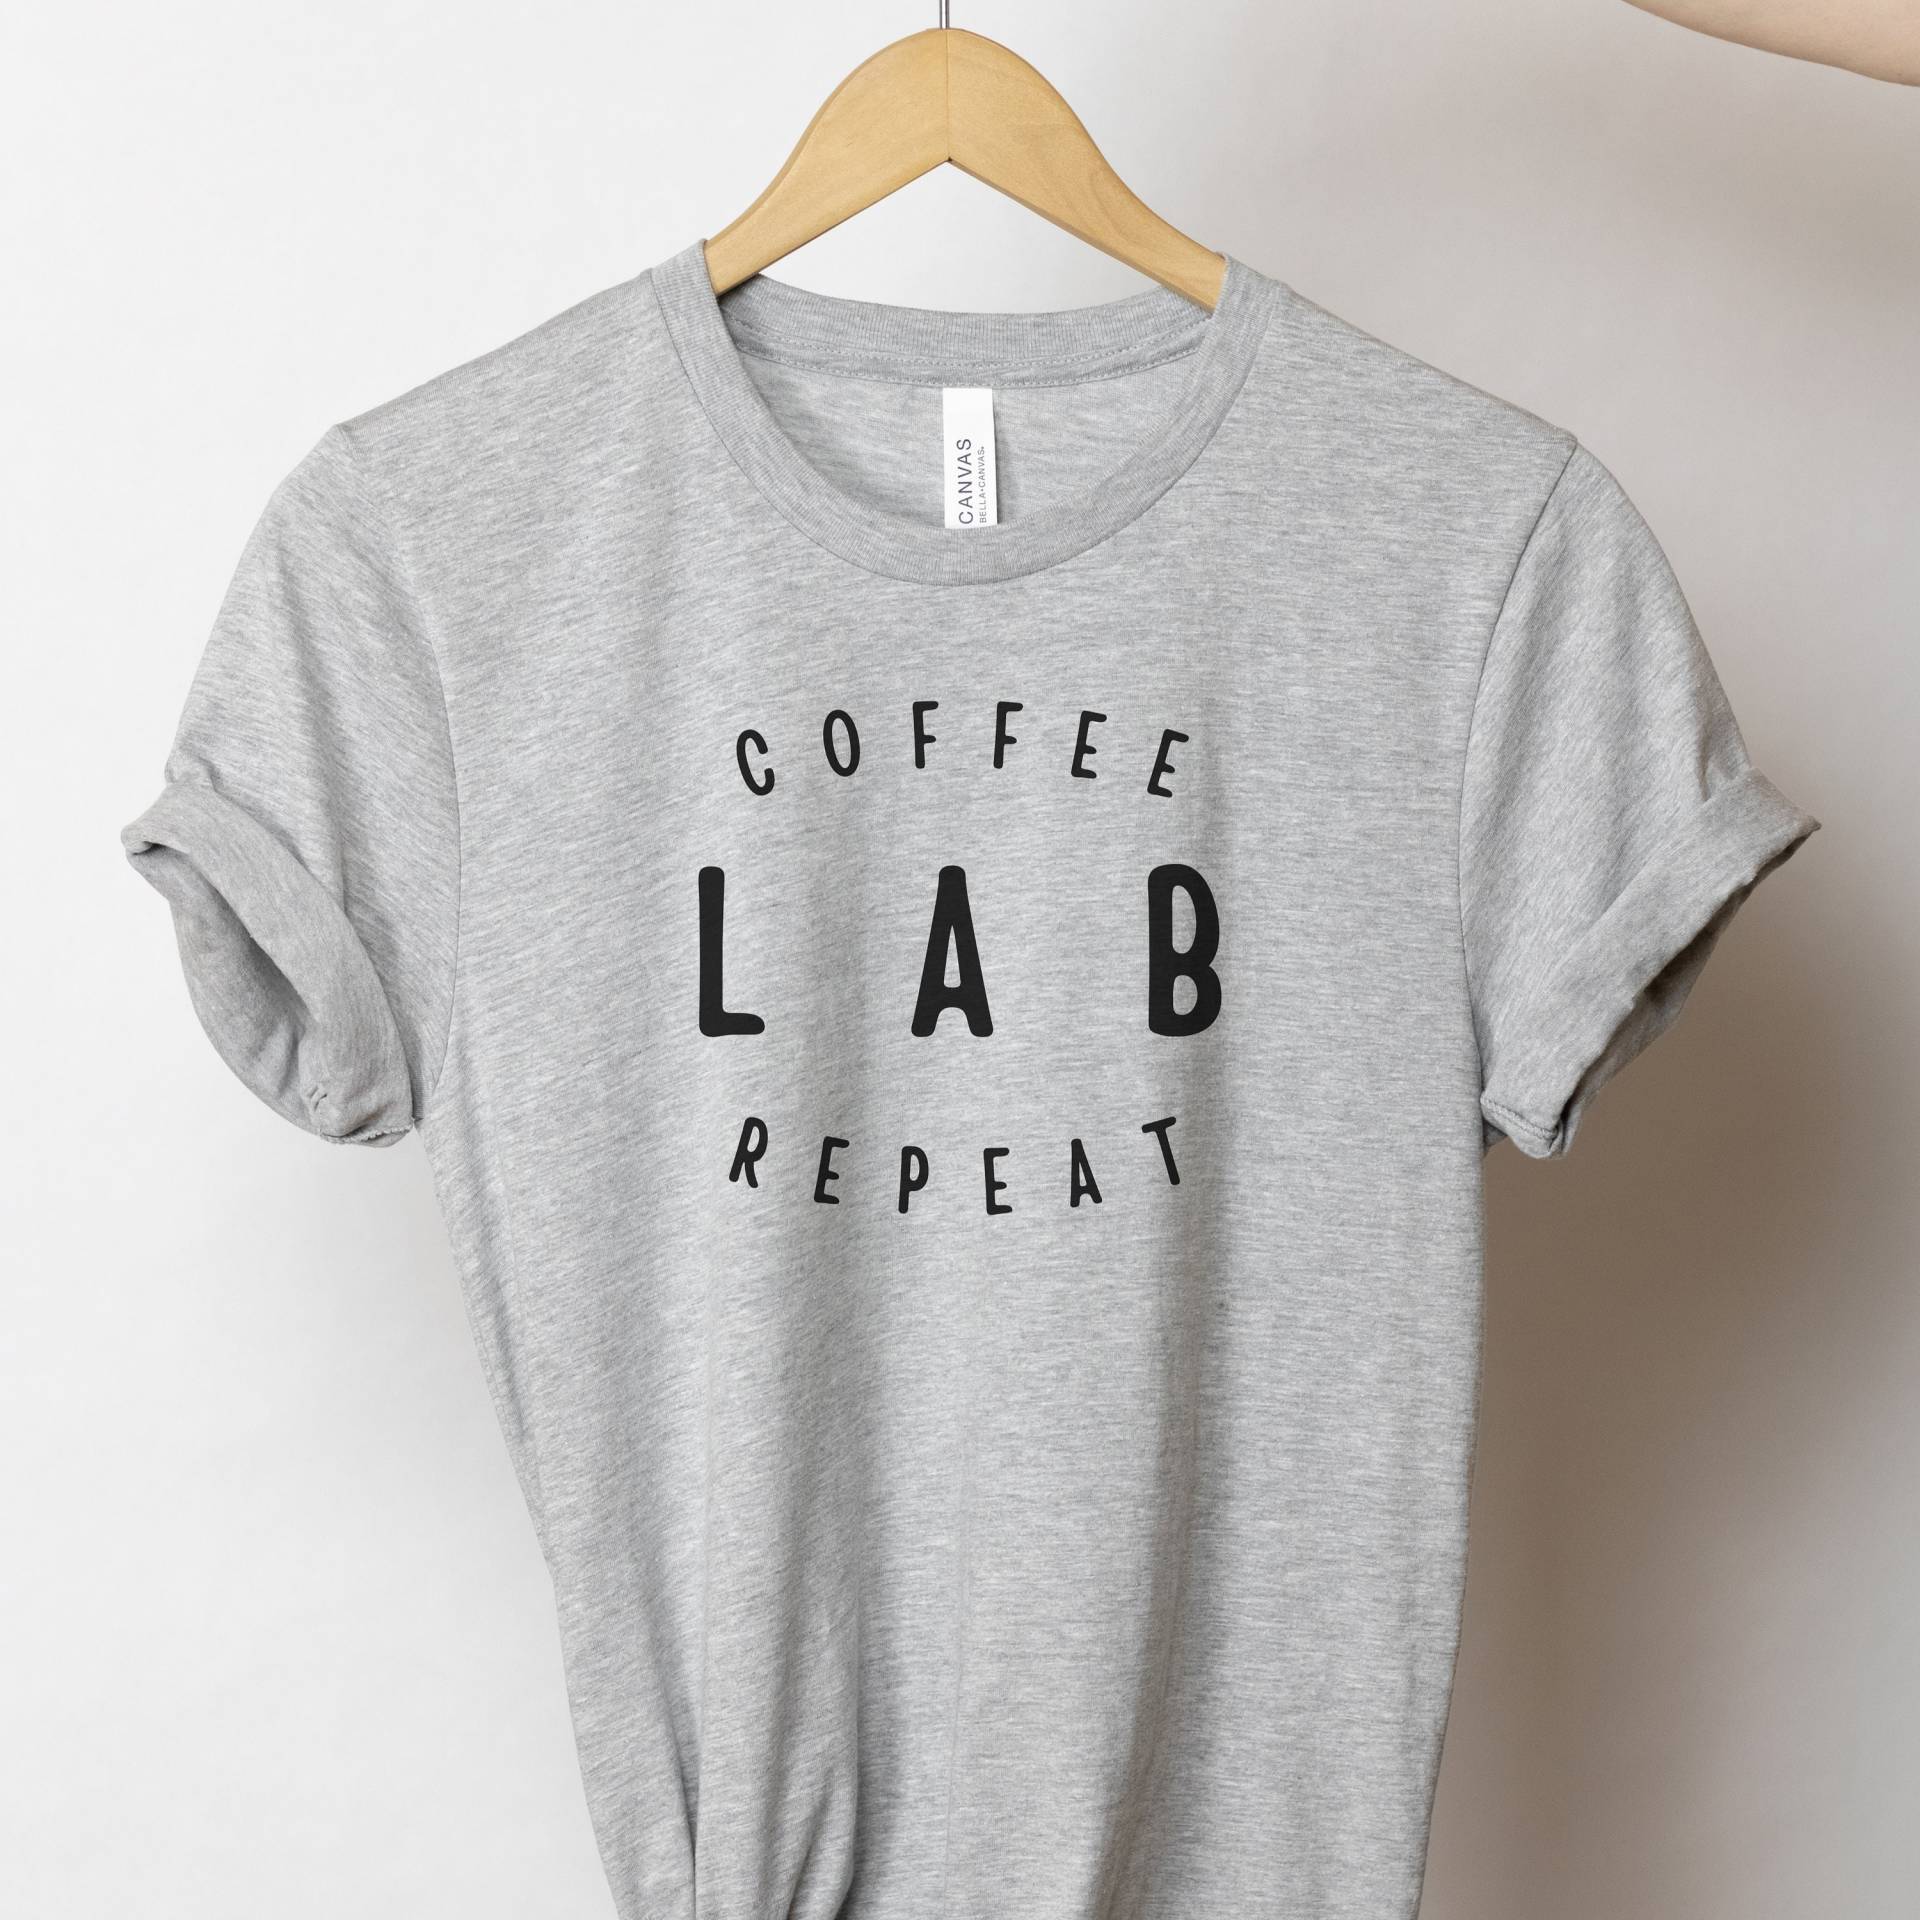 Laborshirt, Langarm, Sweatshirt, Hoodie, Tank Top, Maske, Geschenk, Coffee Lab Repeat, Tech, Med Histologie, Phlebotomist von SleepingCutiesShop